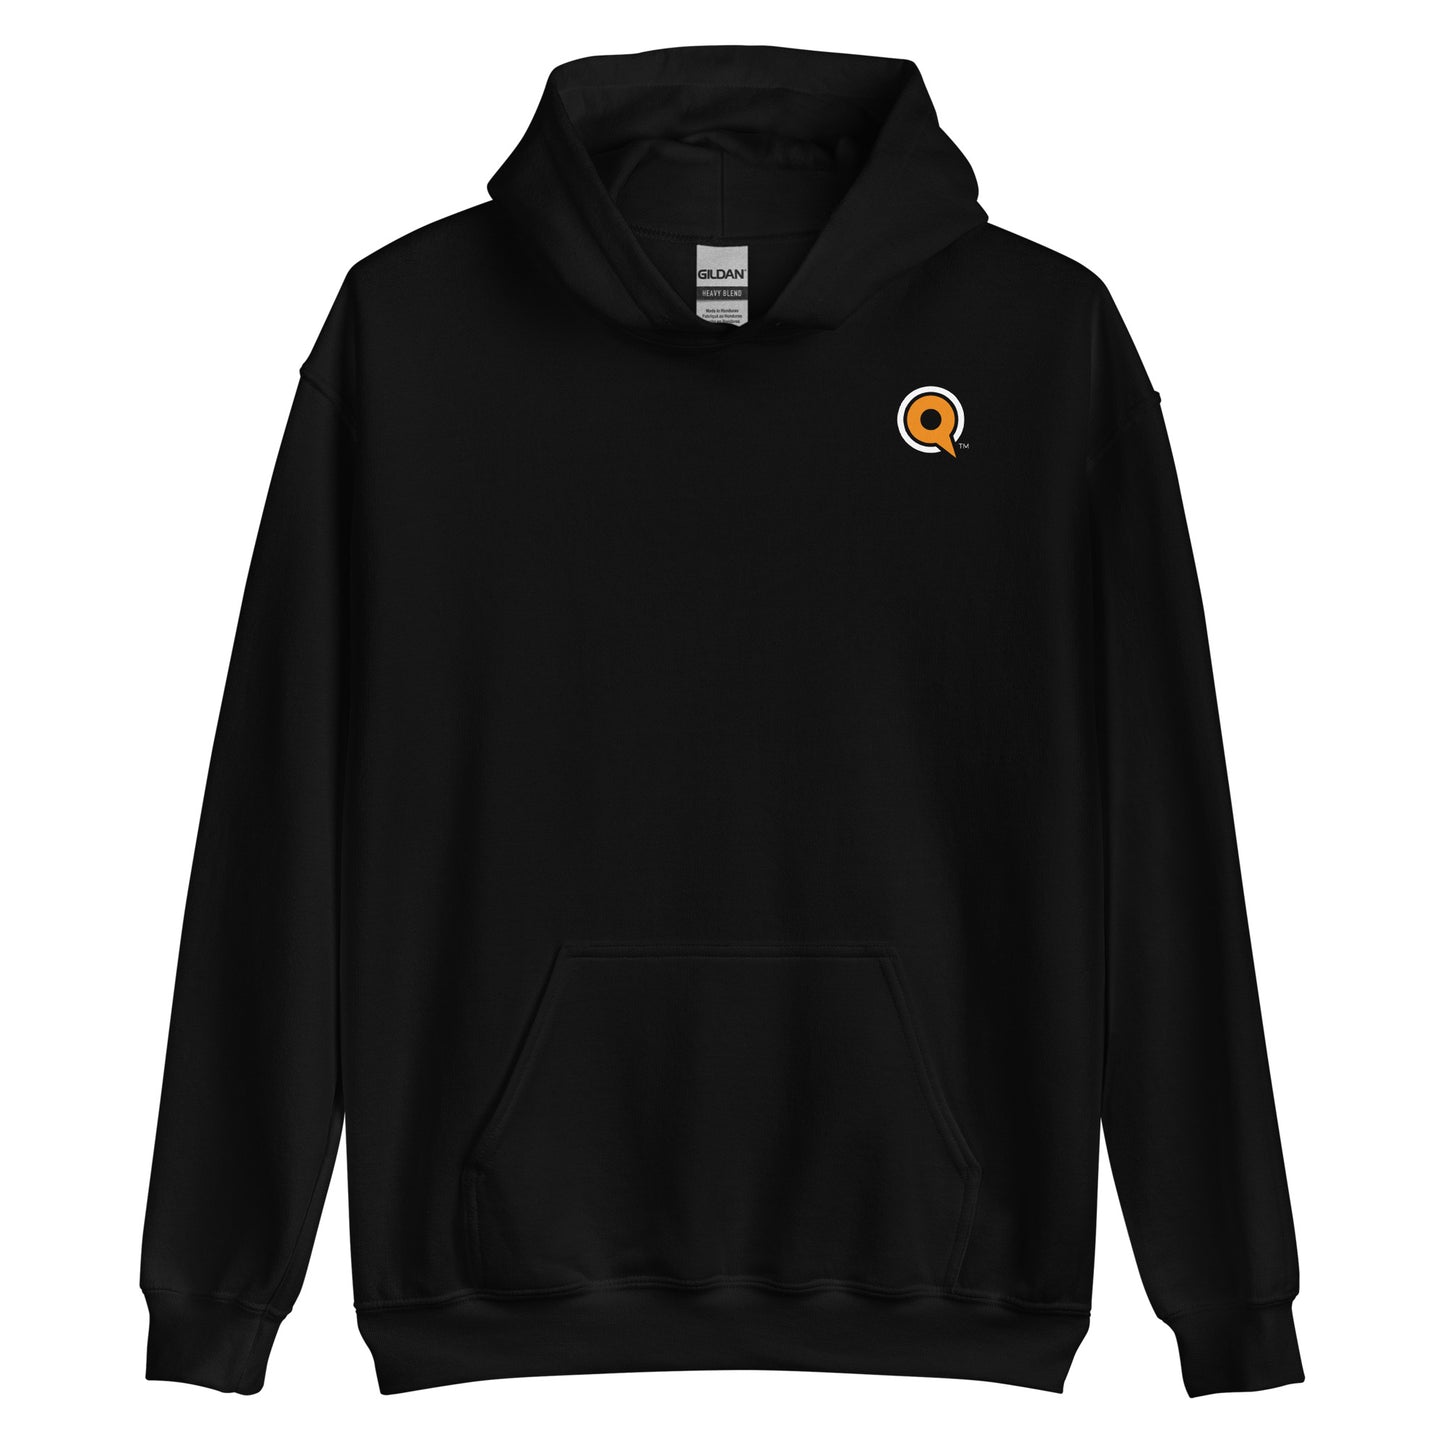 Yaqeen Q hoodie in Black